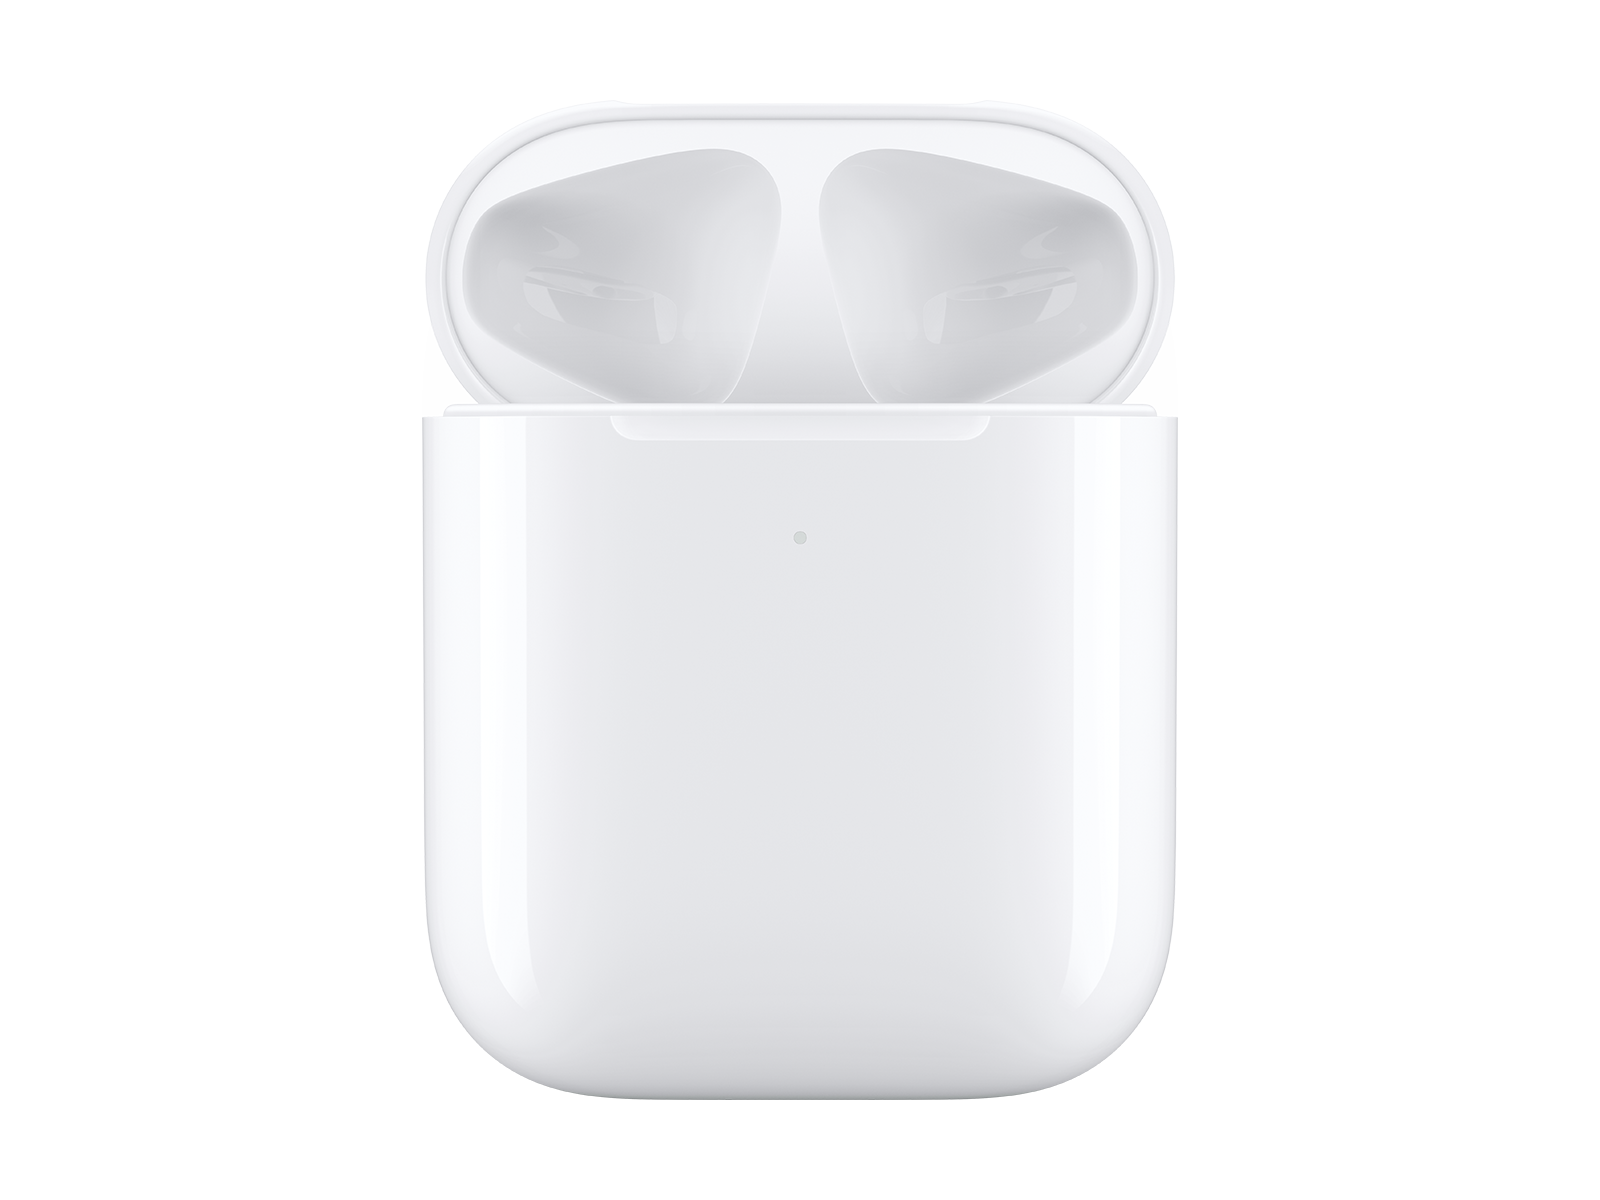 Новый кейс airpods. Apple кейс для AIRPODS 2. Case Apple AIRPODS Pro 2. Apple AIRPODS 2 Wireless Charging Case. Зарядный кейс для аирподс 2.